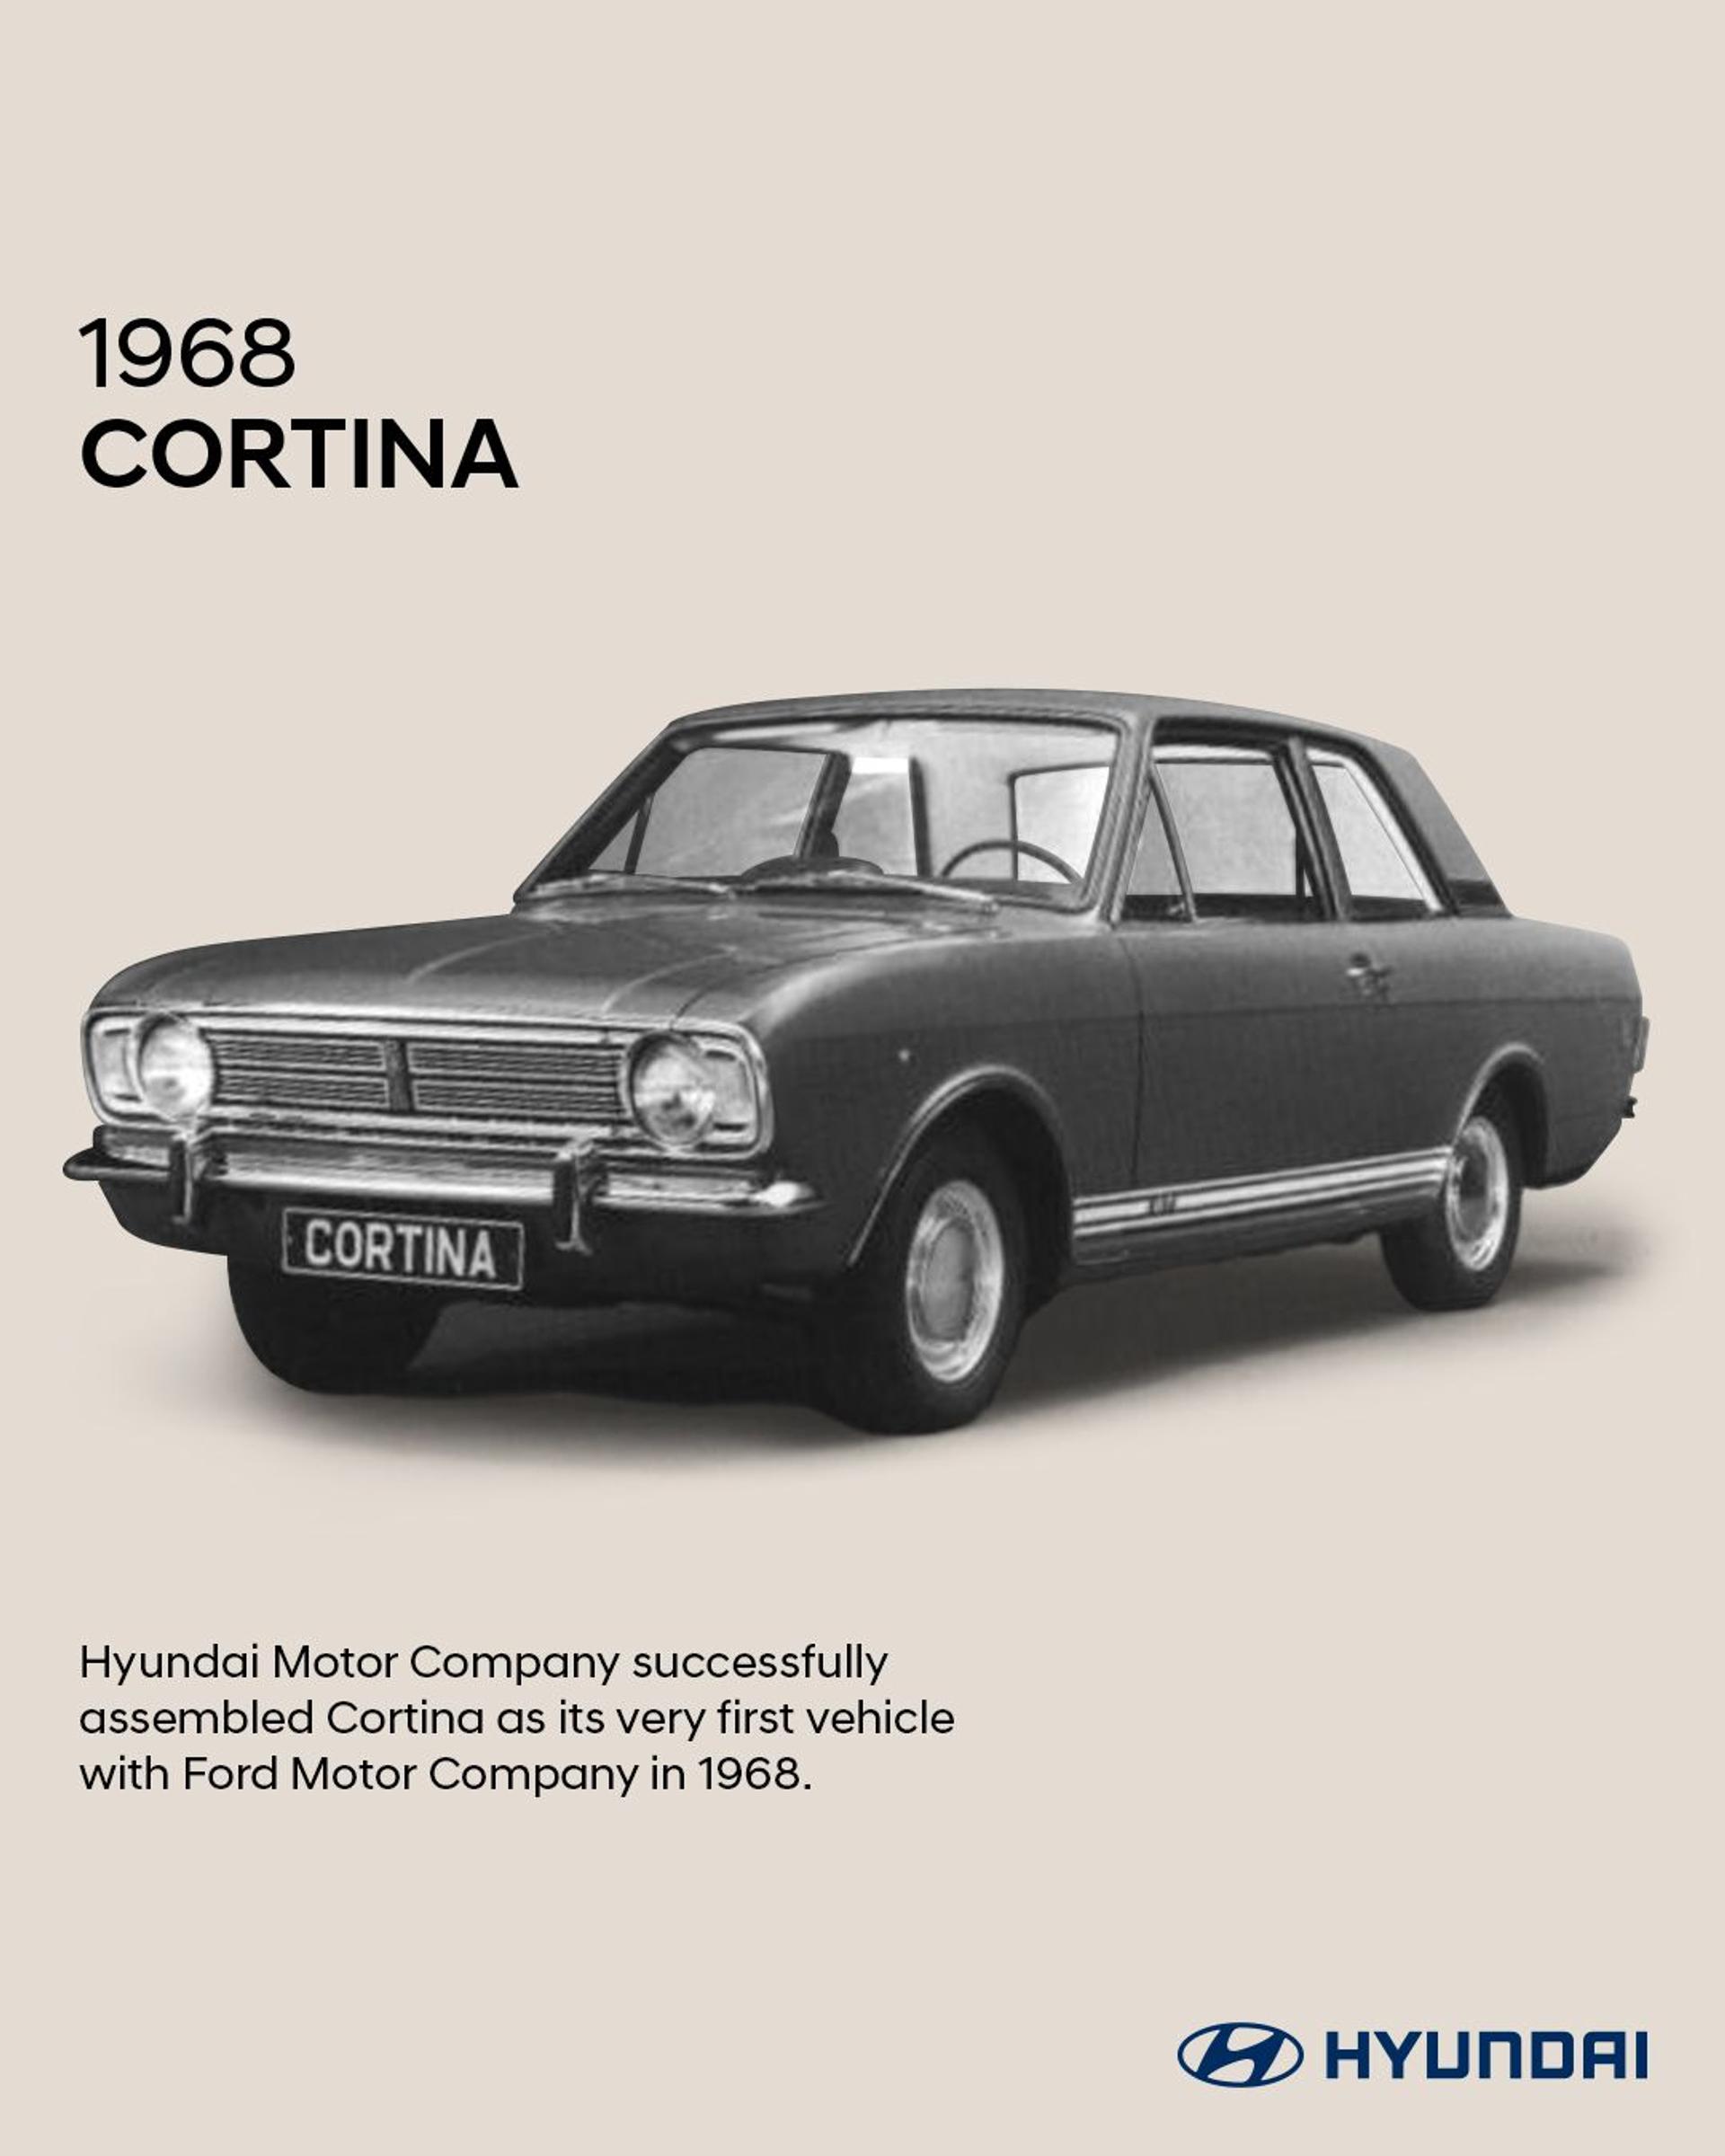 Hyundai 168 Cortina.jpeg